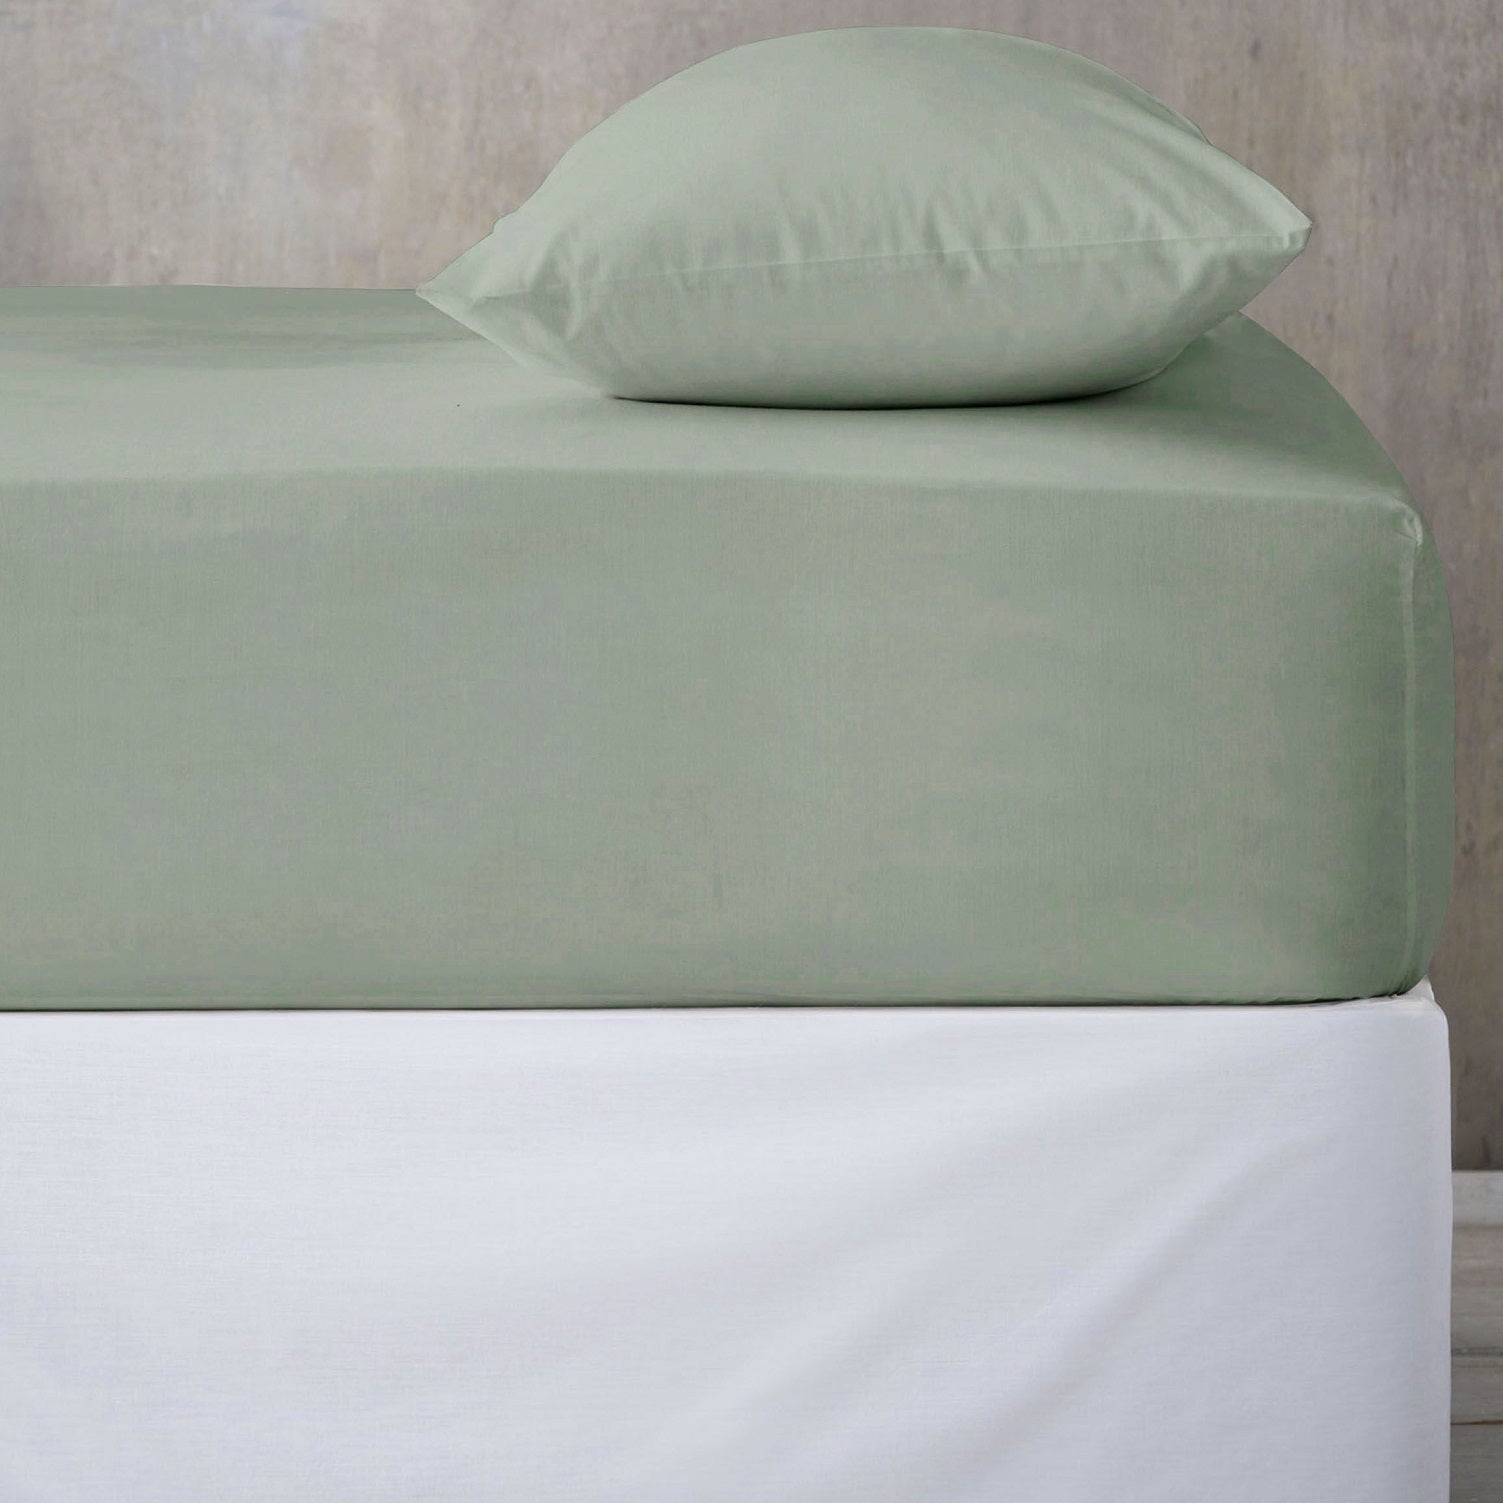 2Pcs Green Plain Dyed Pillowcases